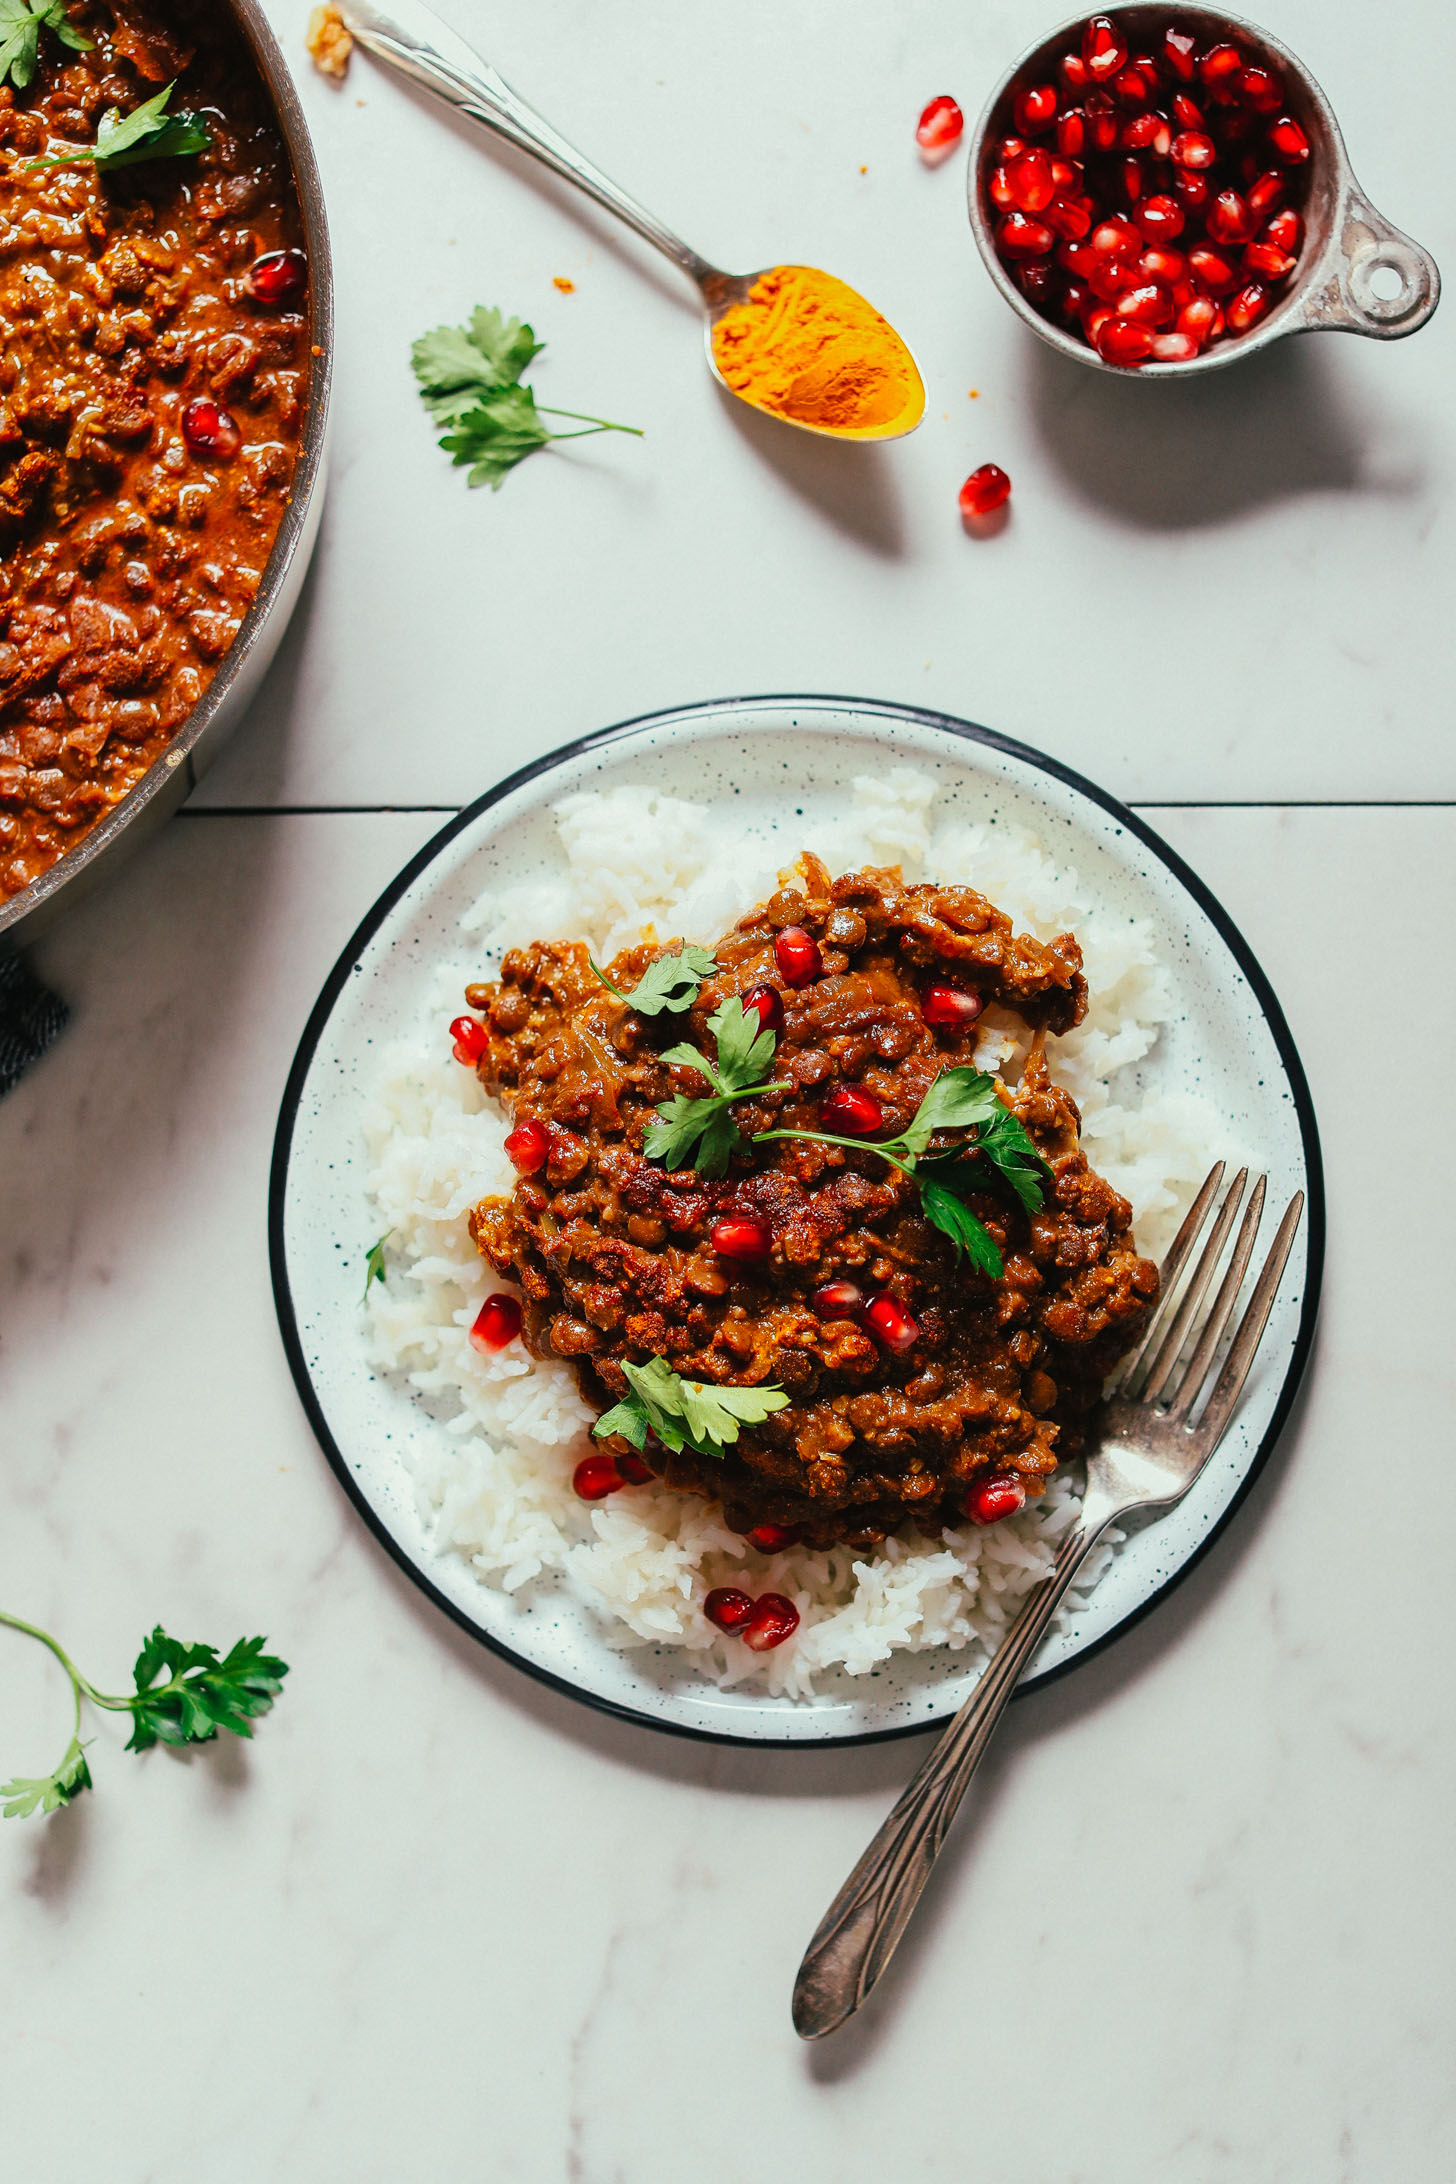 Plate of Lentil Fesenjan over rice for a hearty gluten-free vegan meal